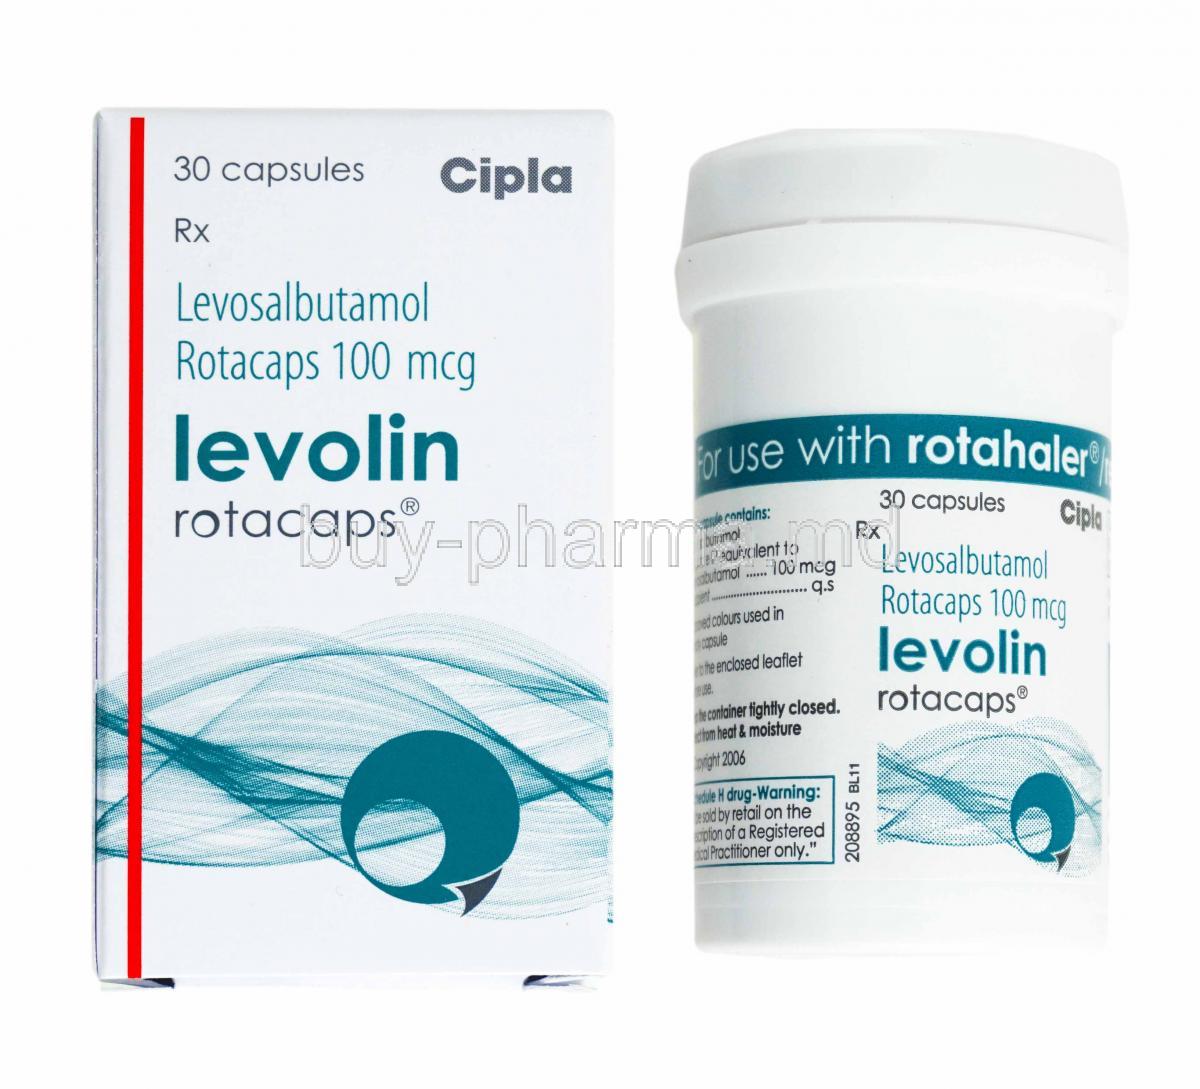 Levolin Rotacap, Levosalbutamol box and bottle